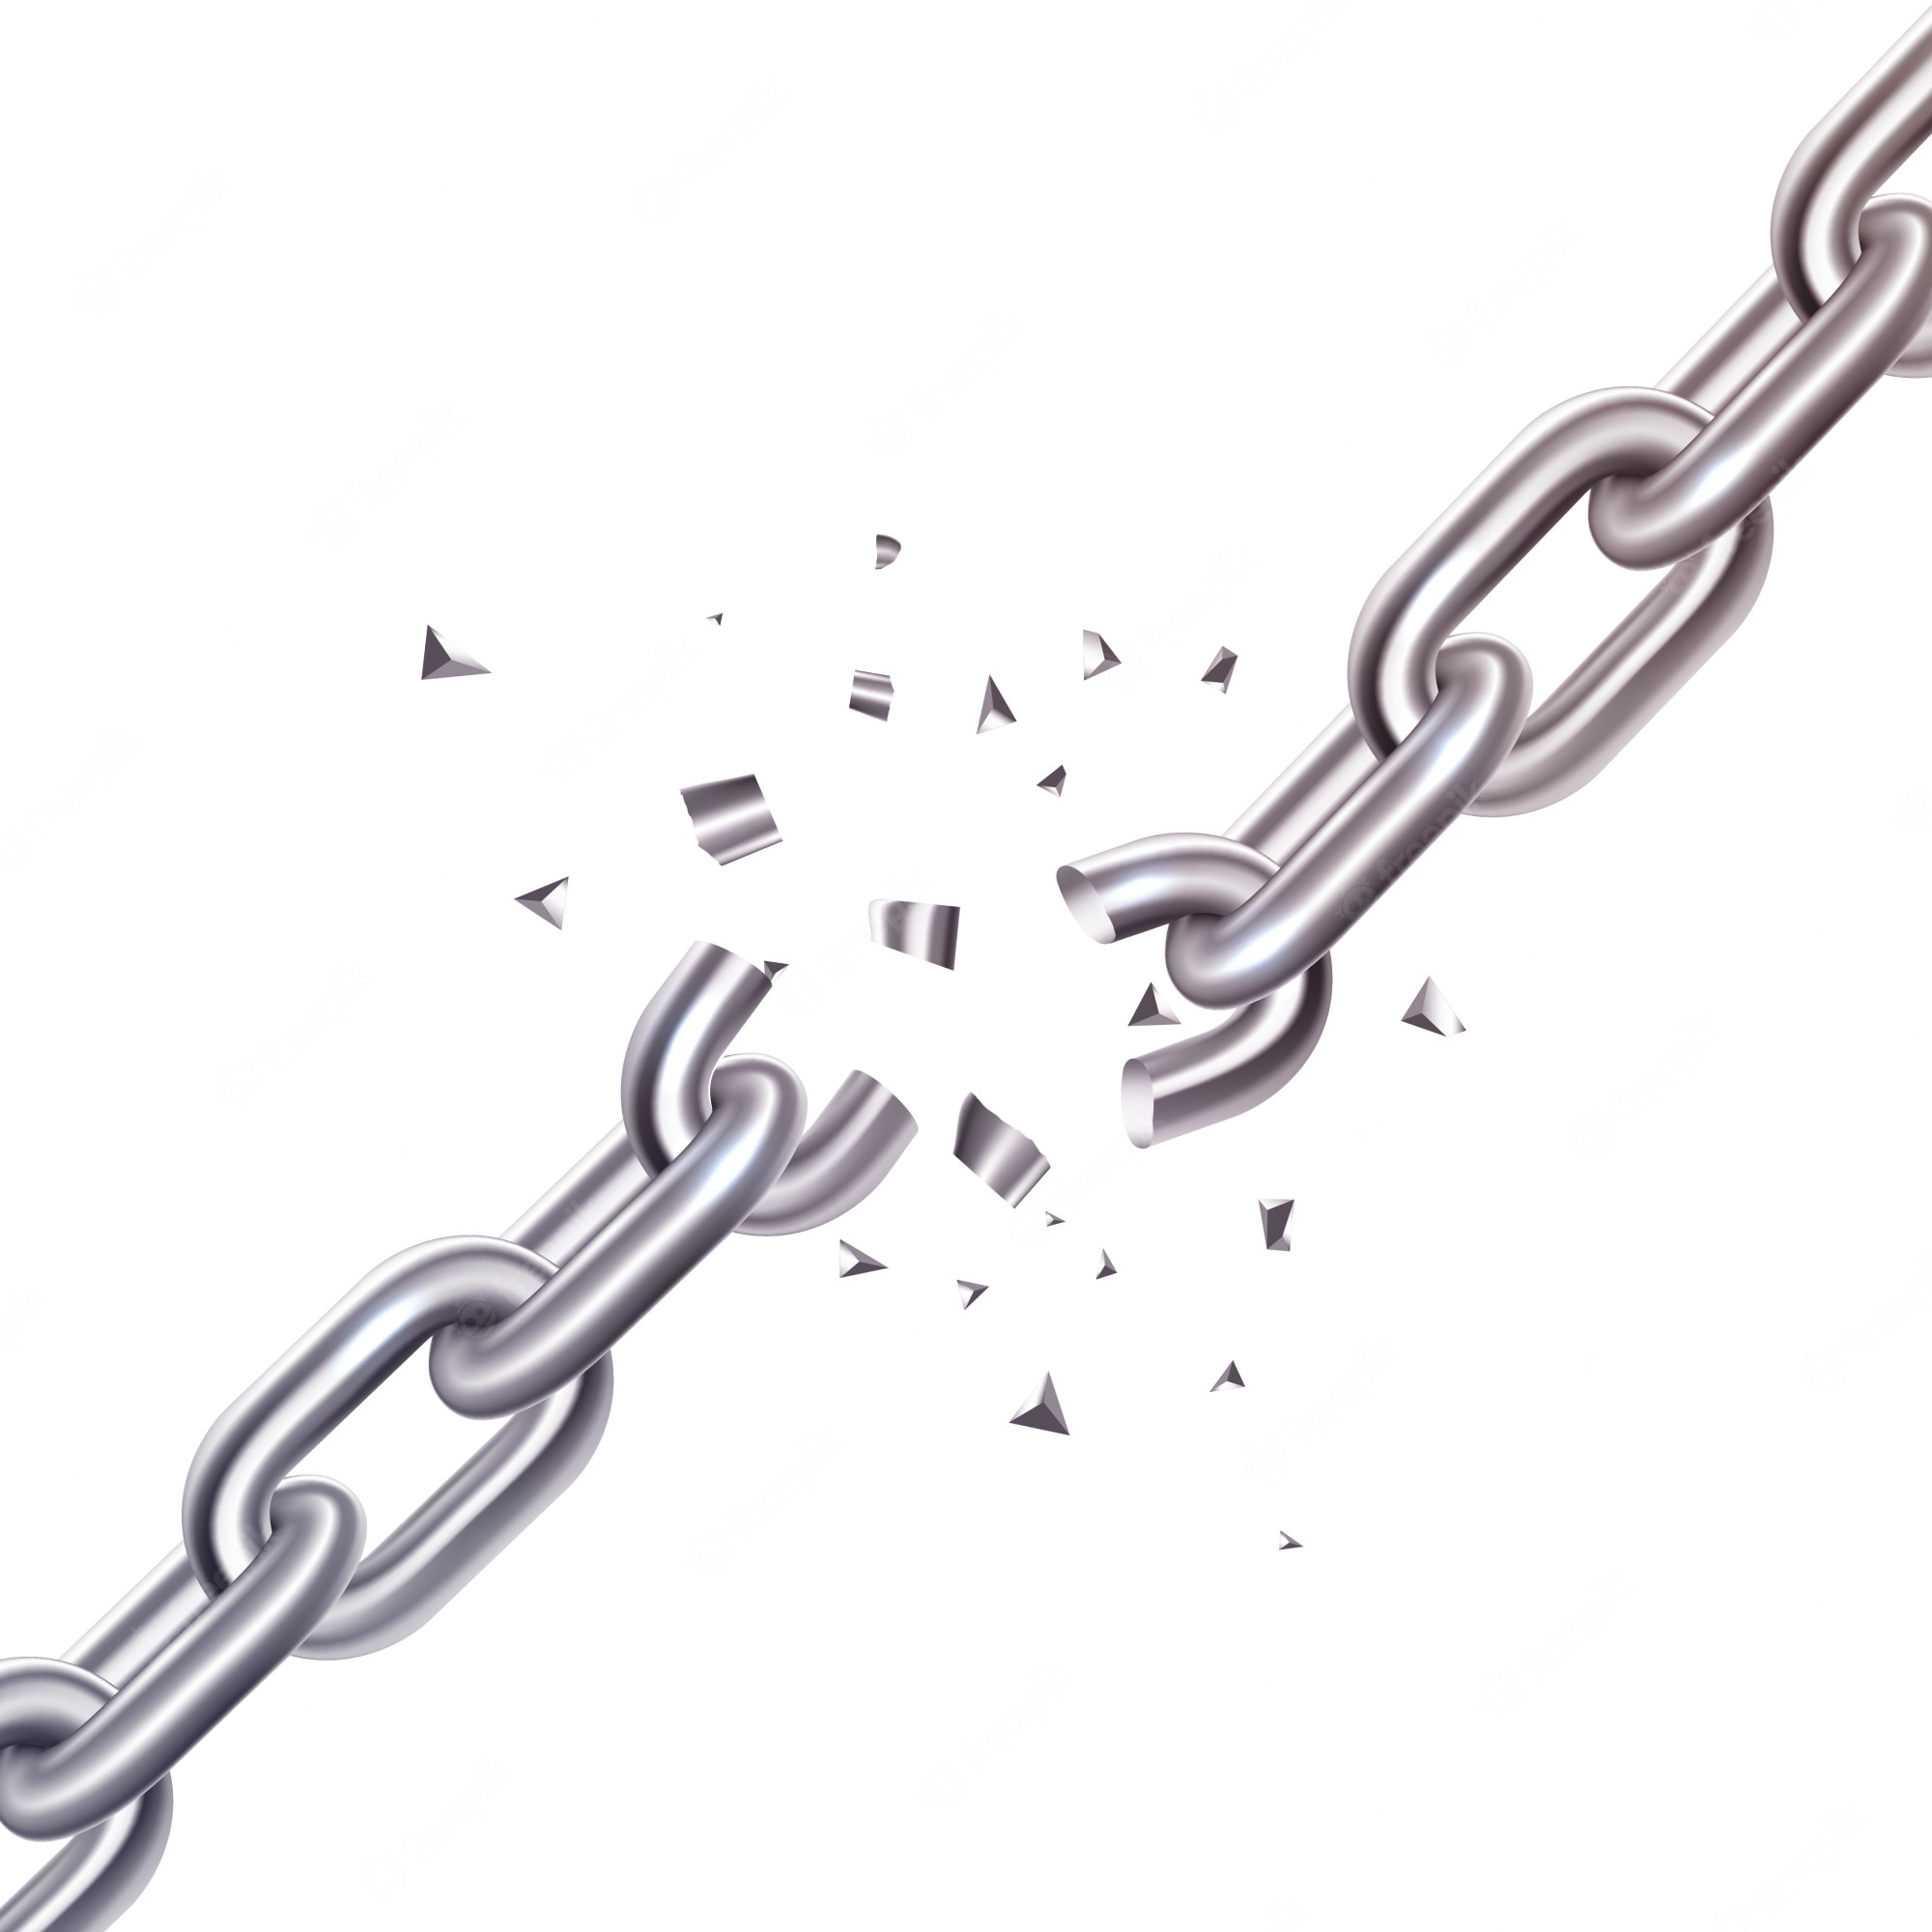 Free Vector. Broken chain illustration